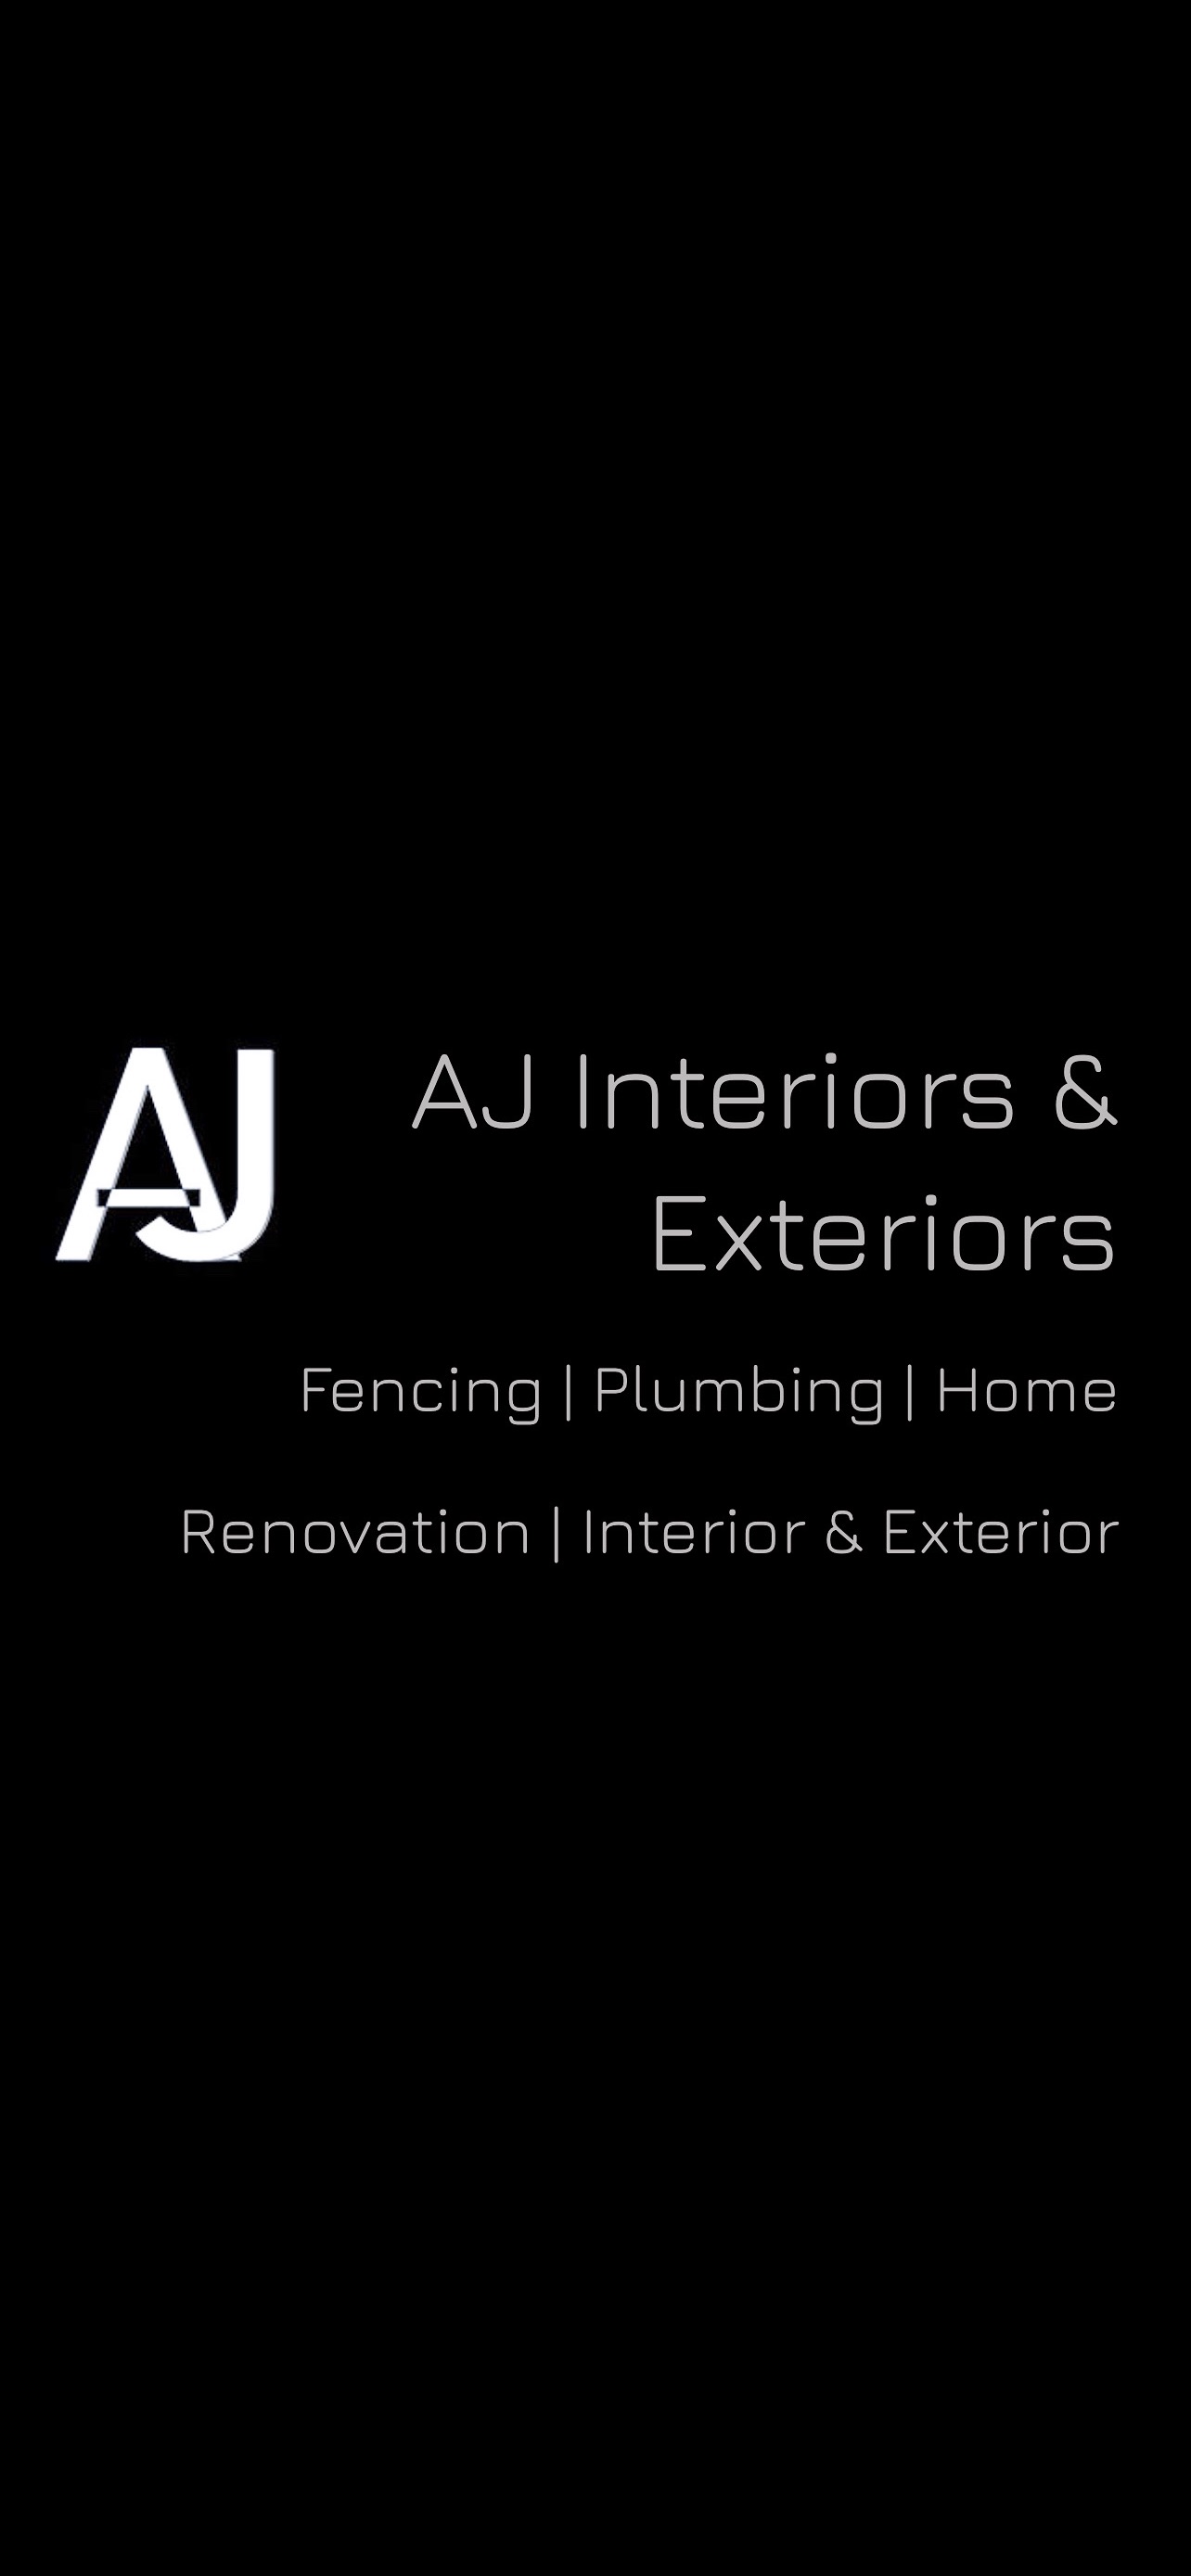 AJ Interiors & Exteriors Pty Ltd